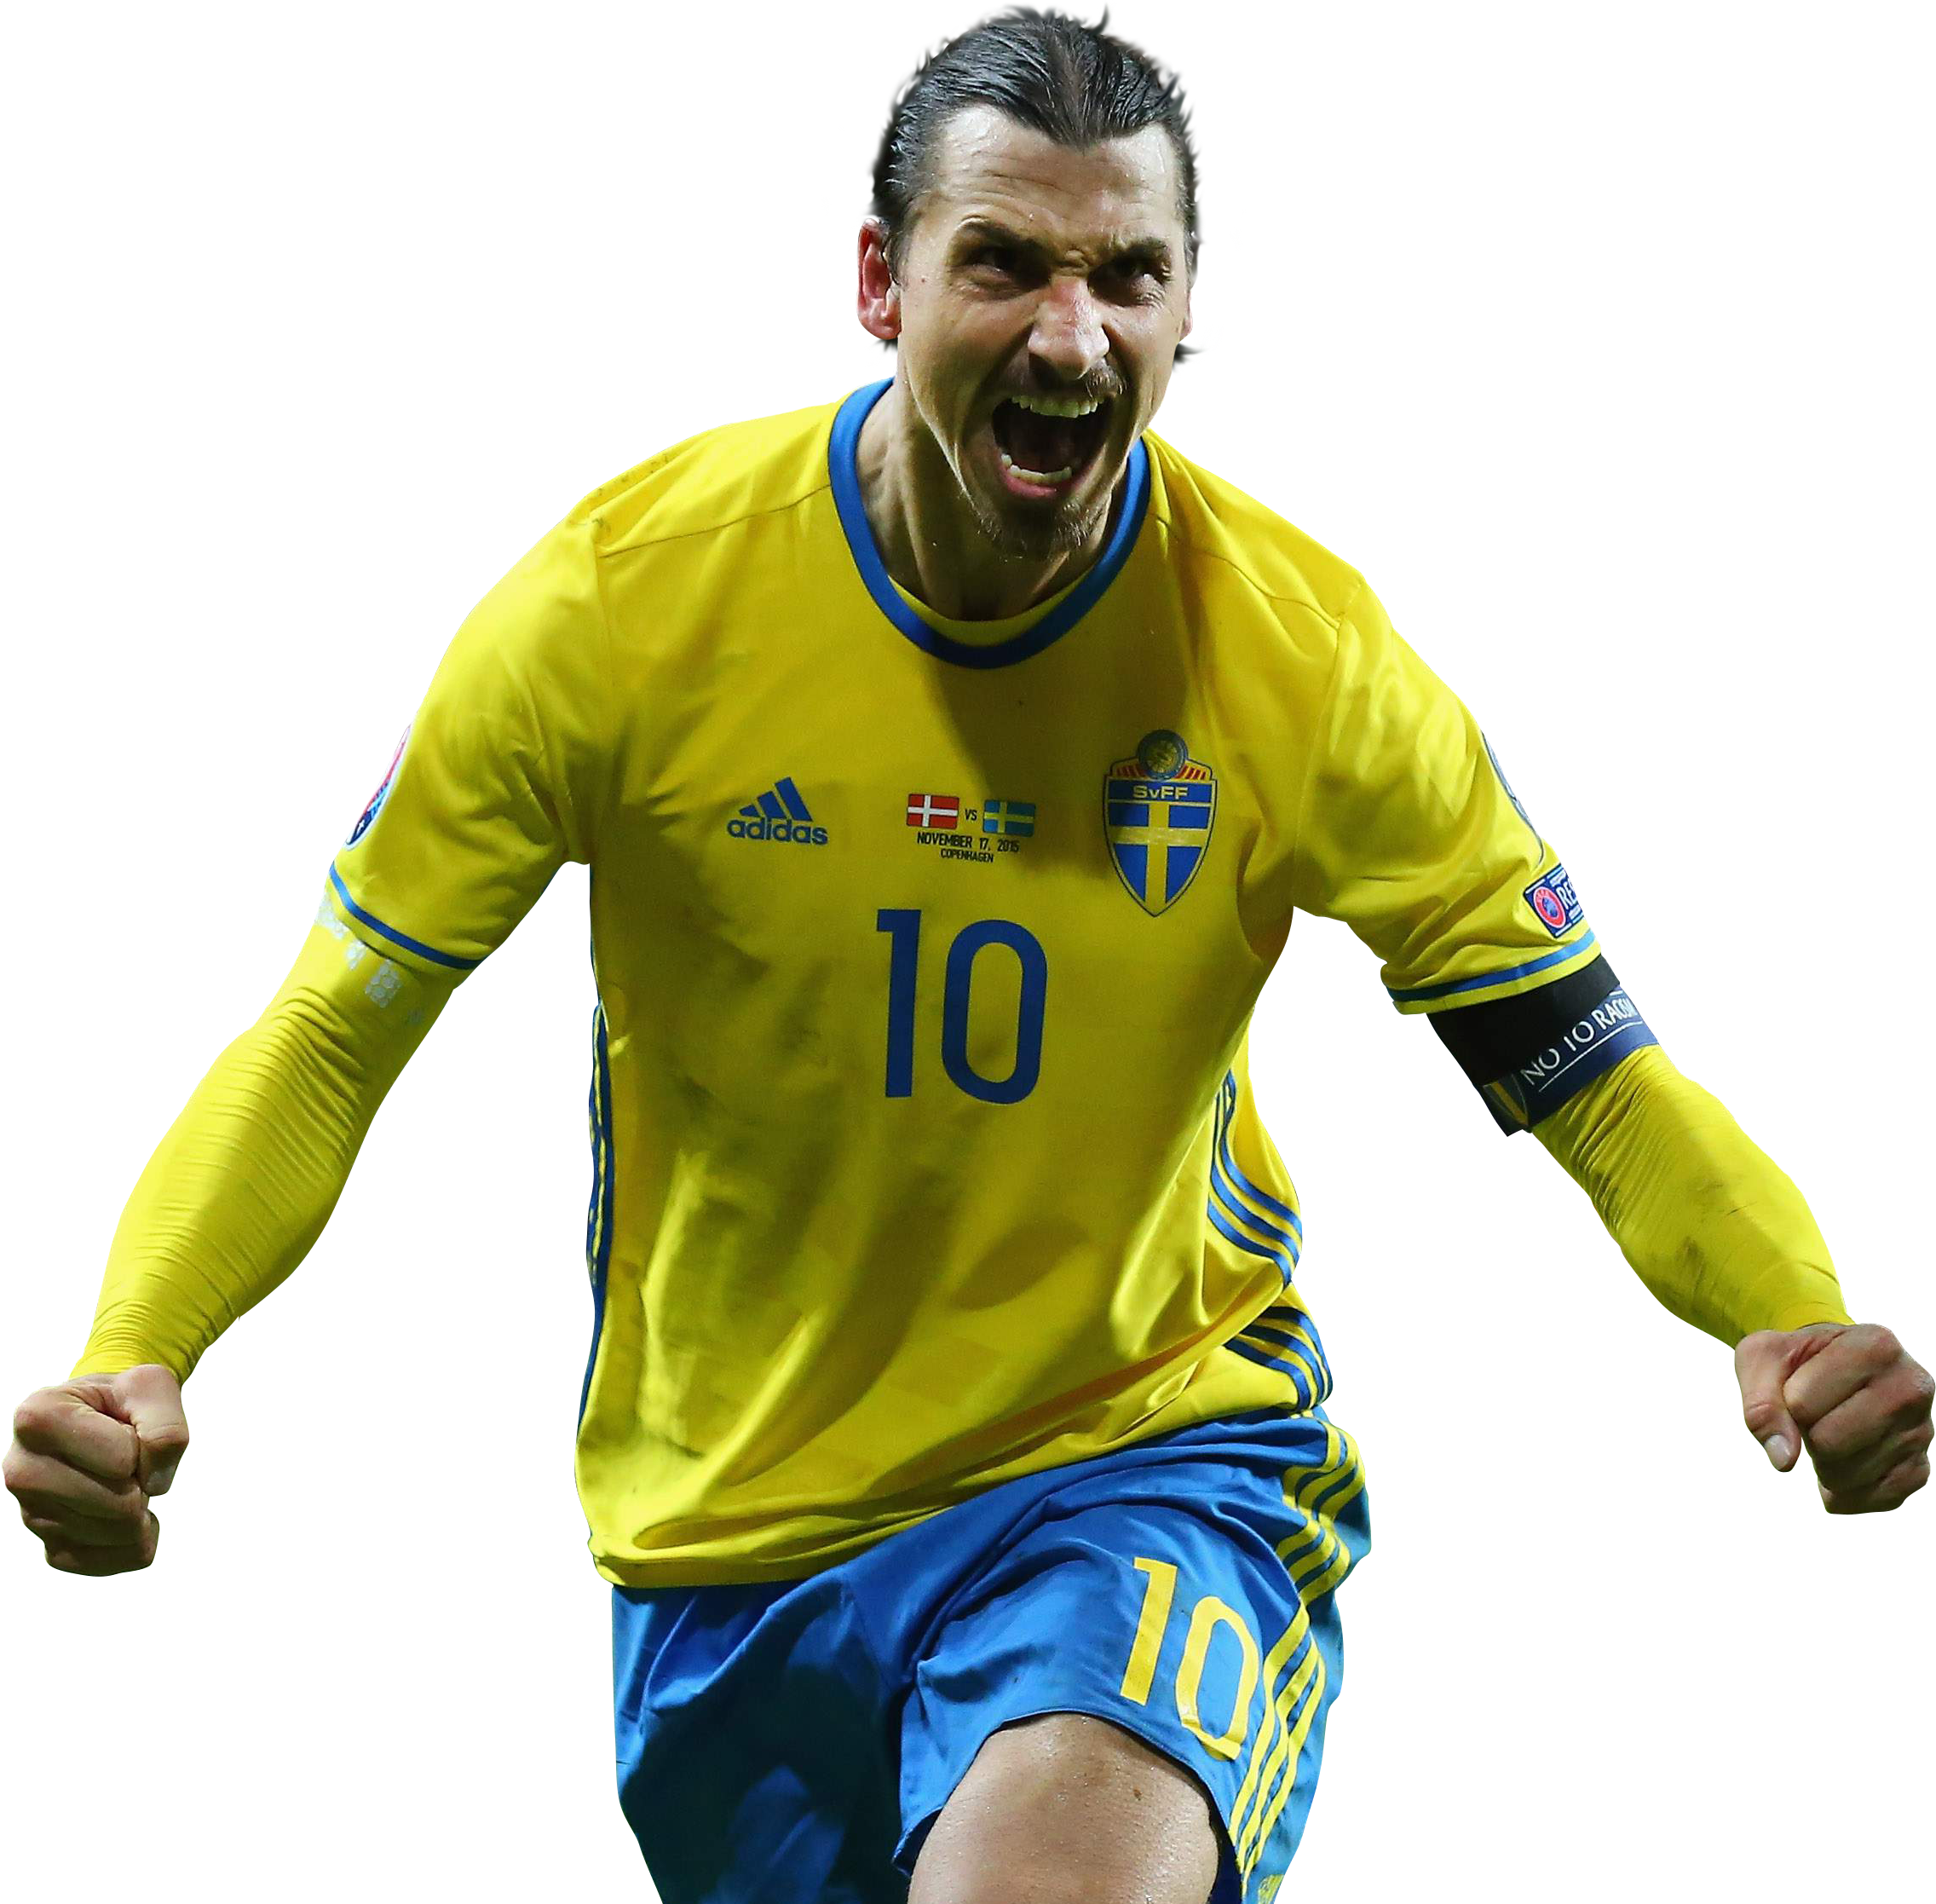 Swedish Footballer Celebration